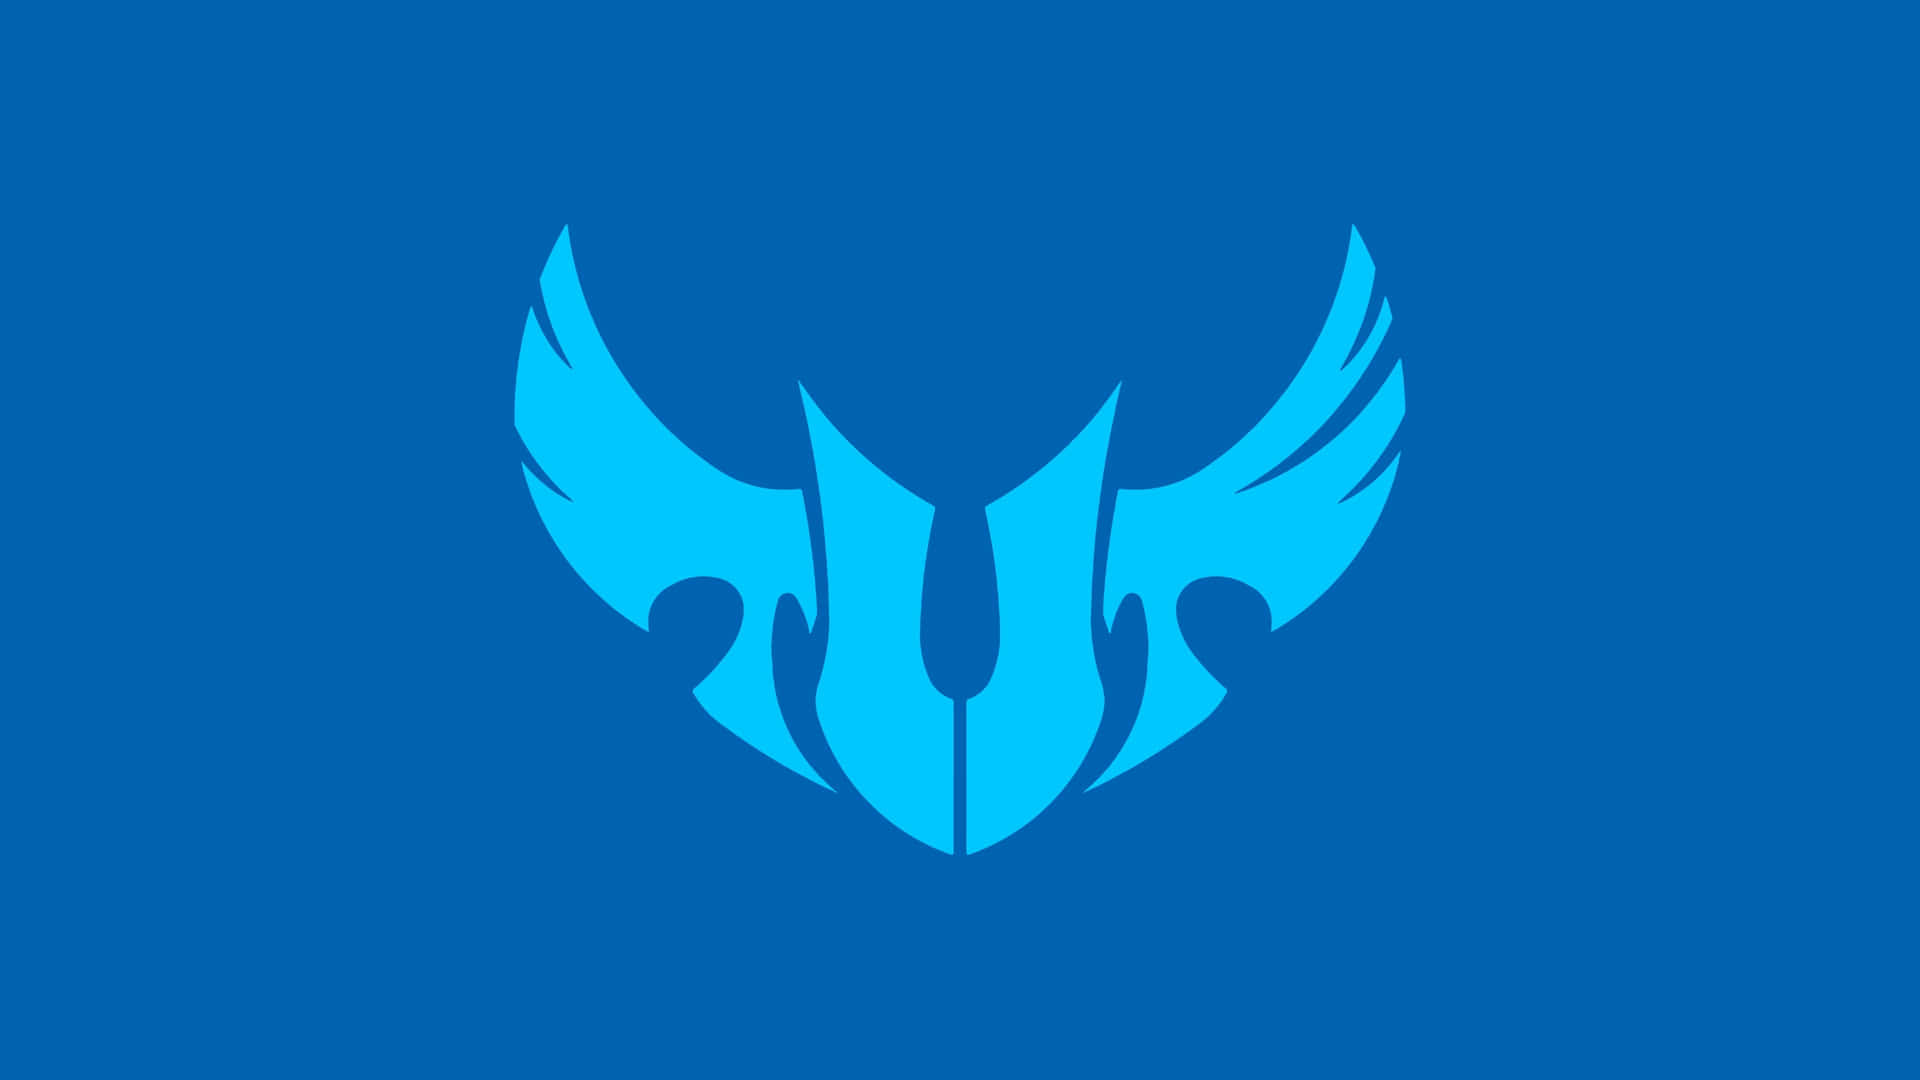 Asus T U F Gaming Logo Blue Background